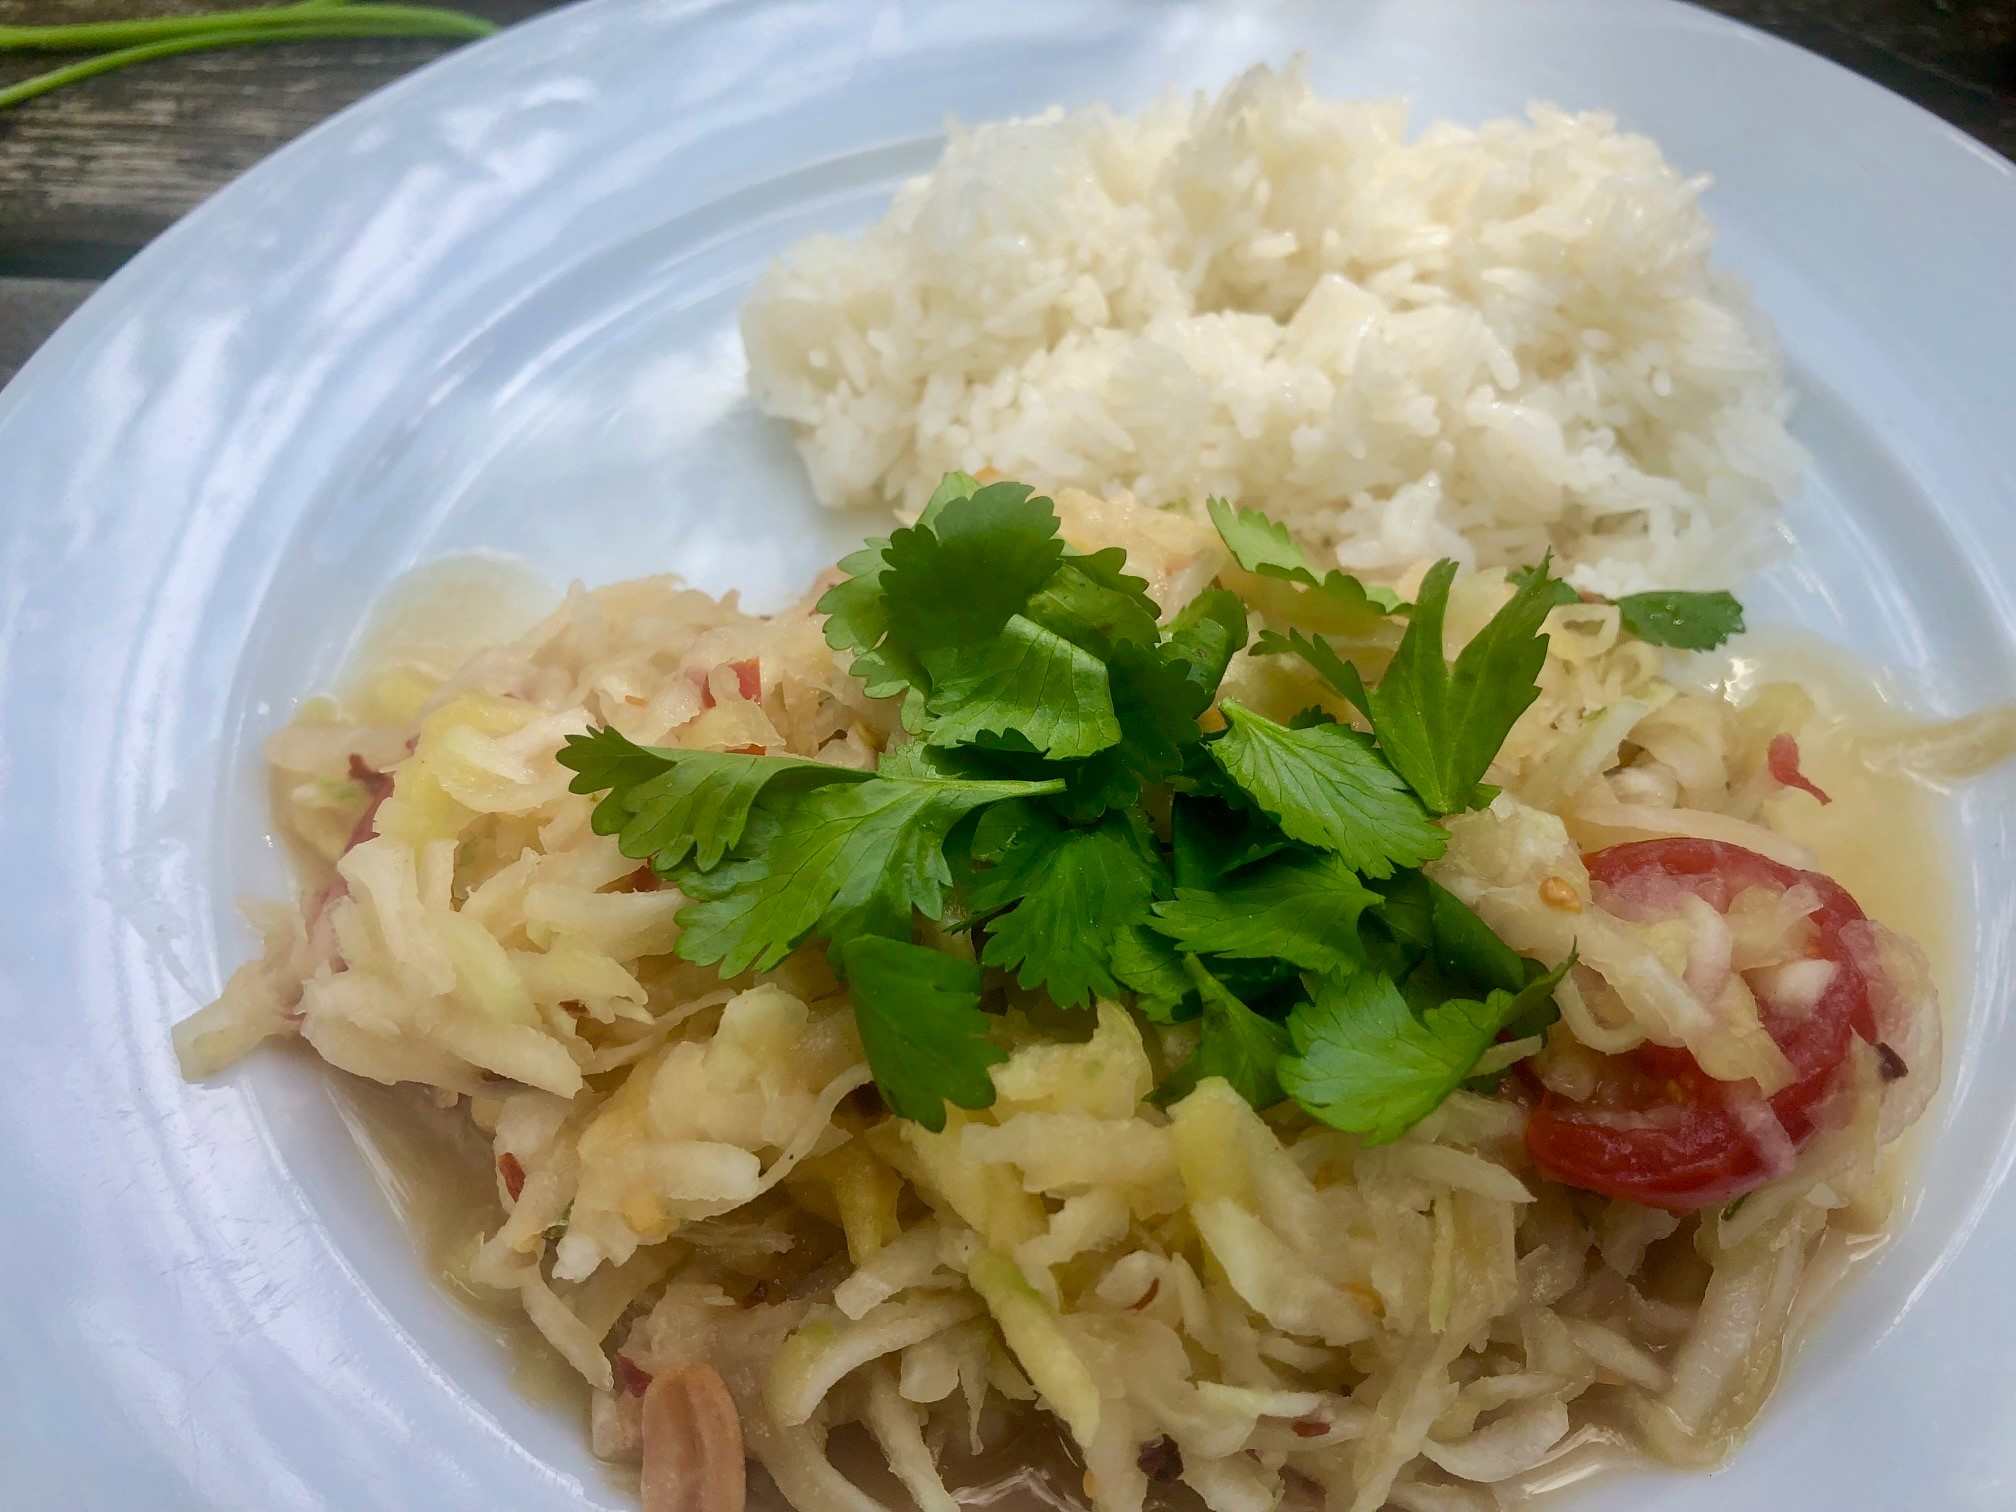 Regional instead of air freight: Thai style kohlrabi salad